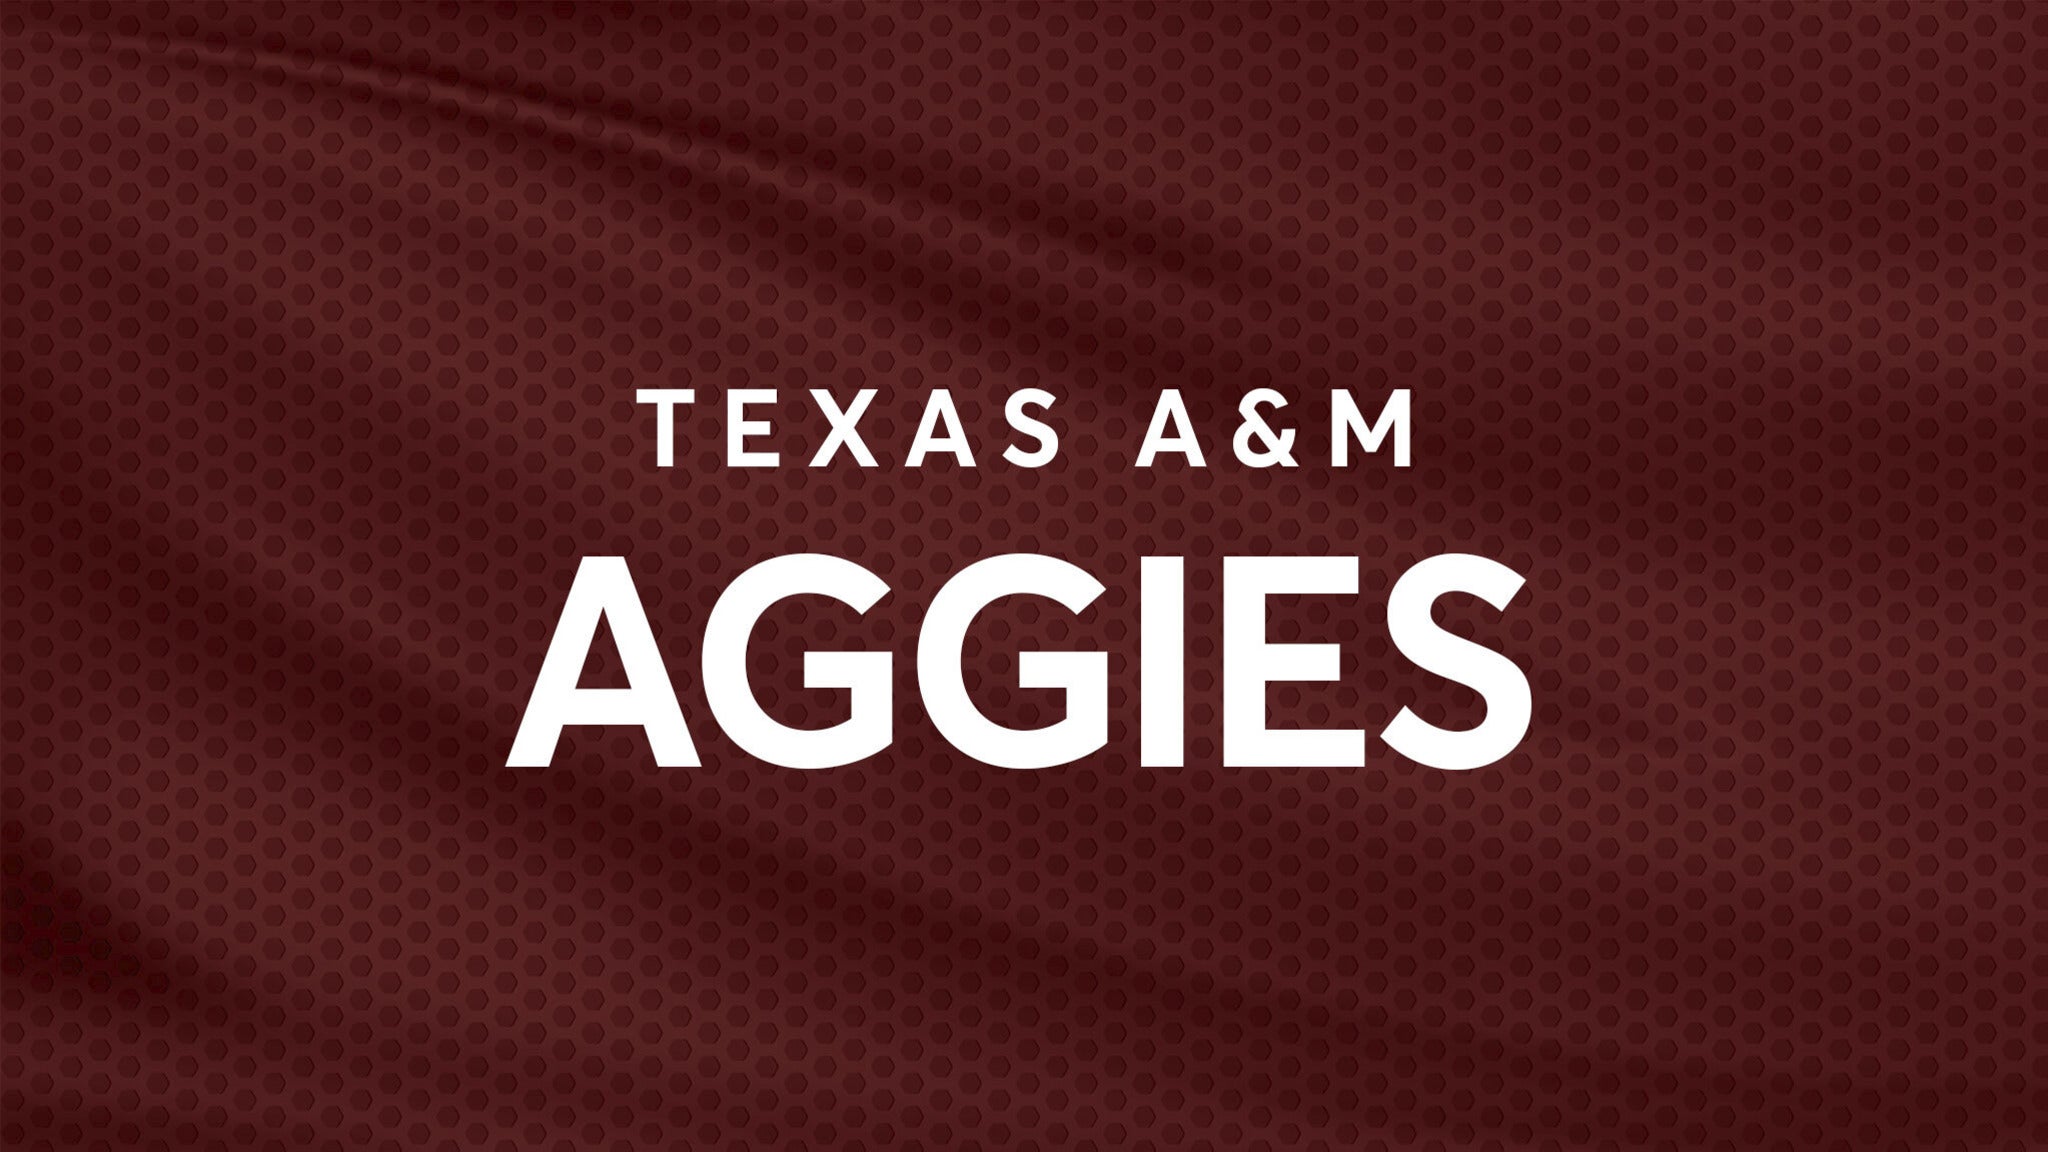 Texas A&M Aggies Baseball vs. Sam Houston State Bearkats Baseball